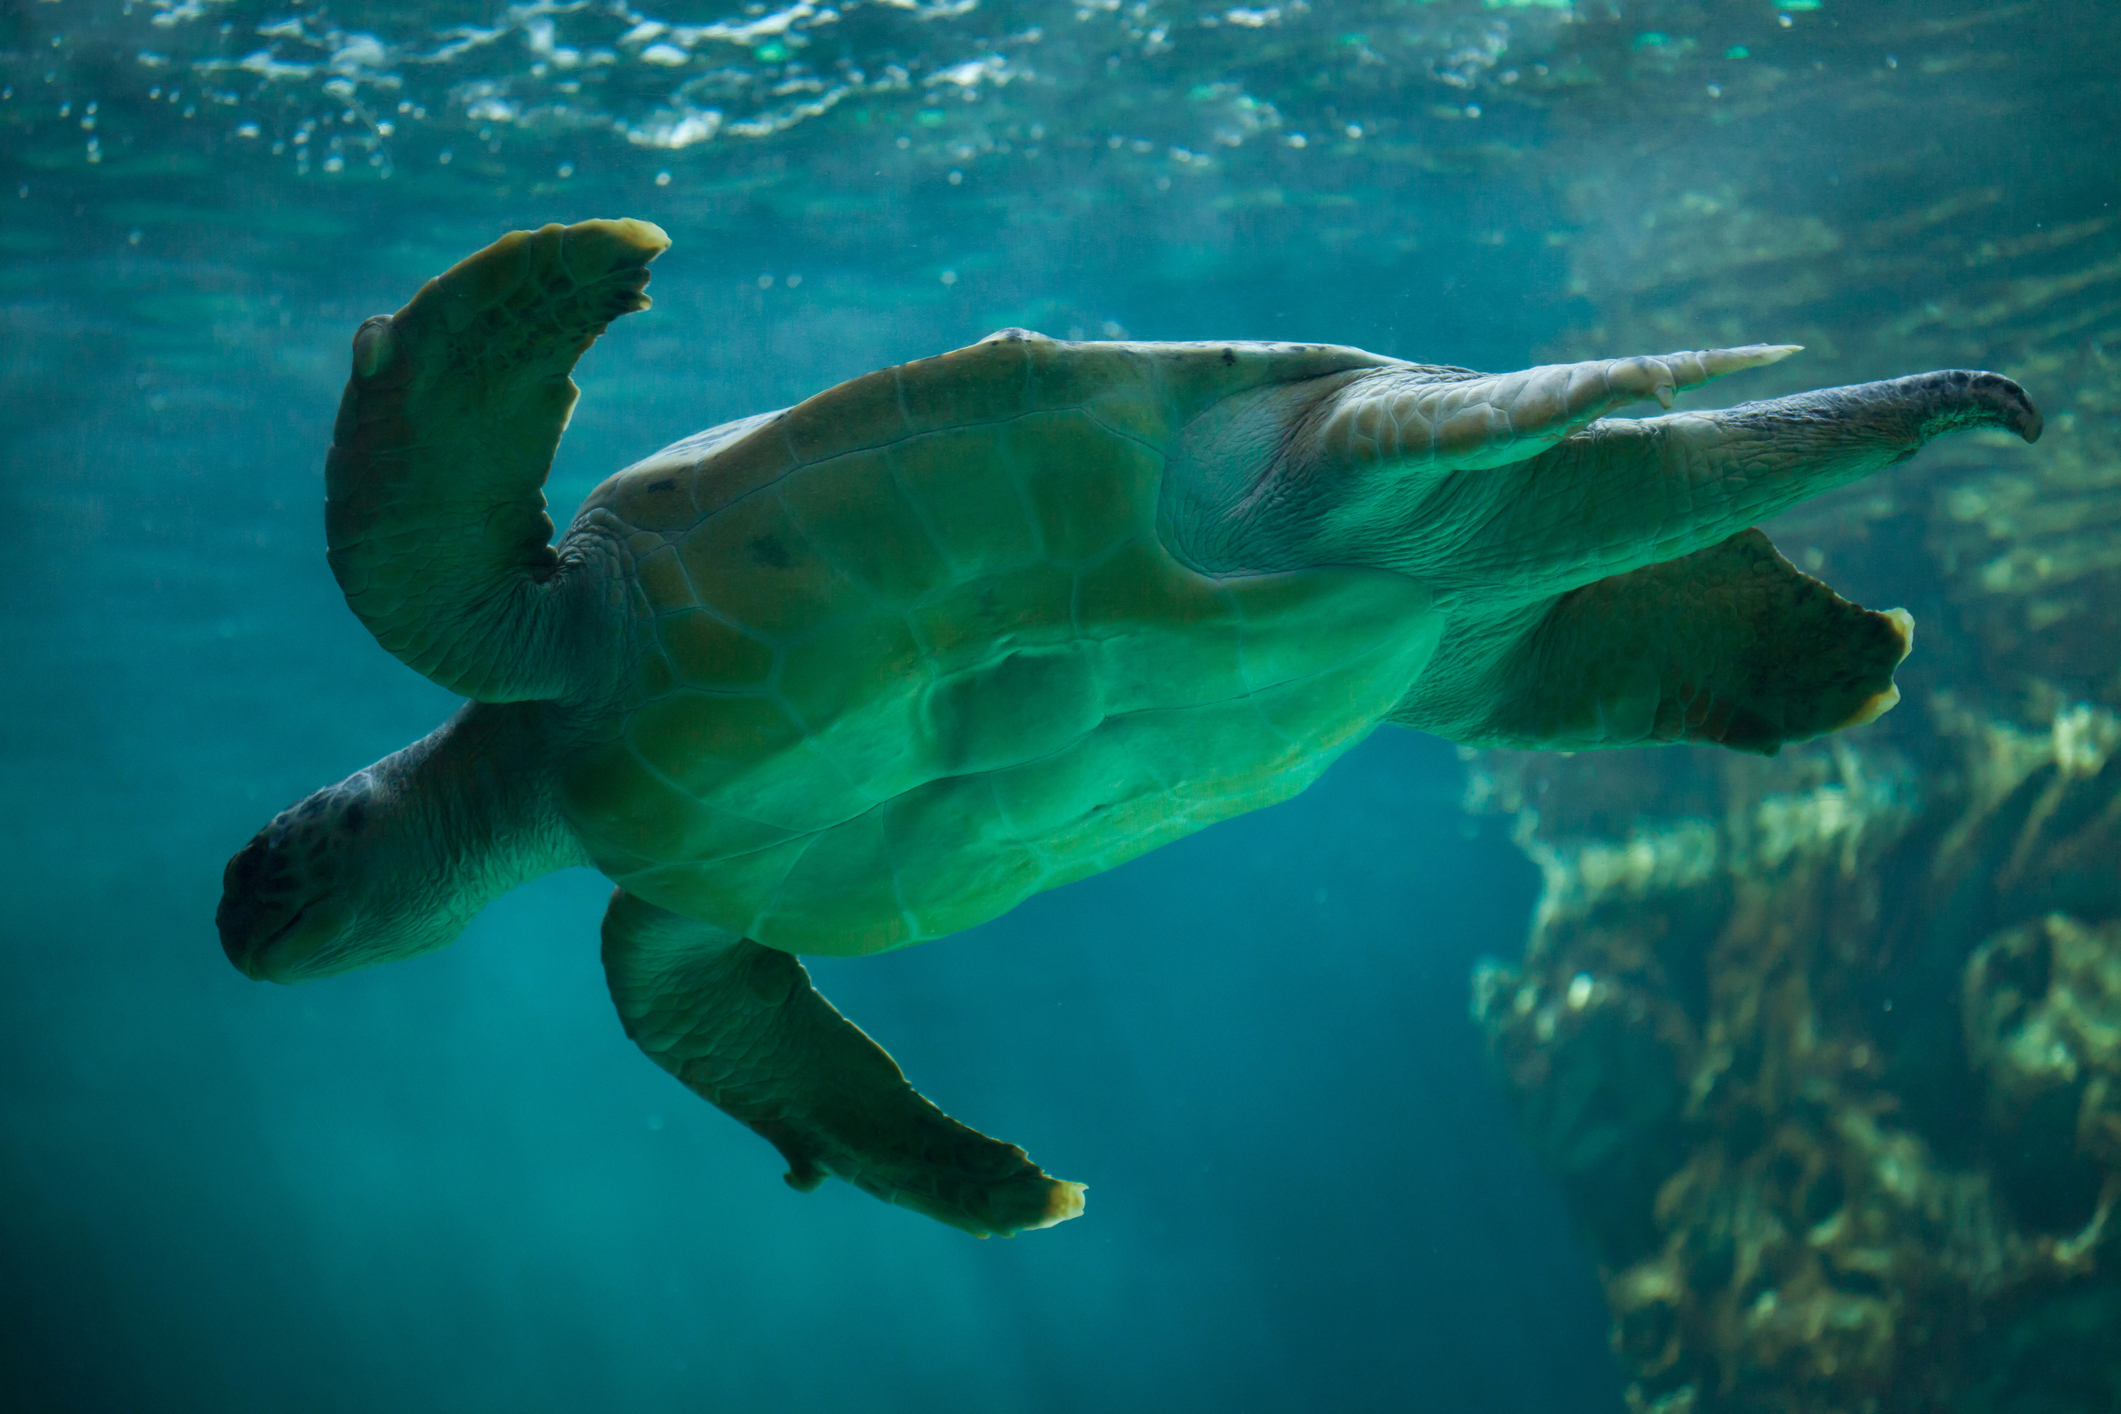 A sea turtle navigates the dark green depths of the ocean.